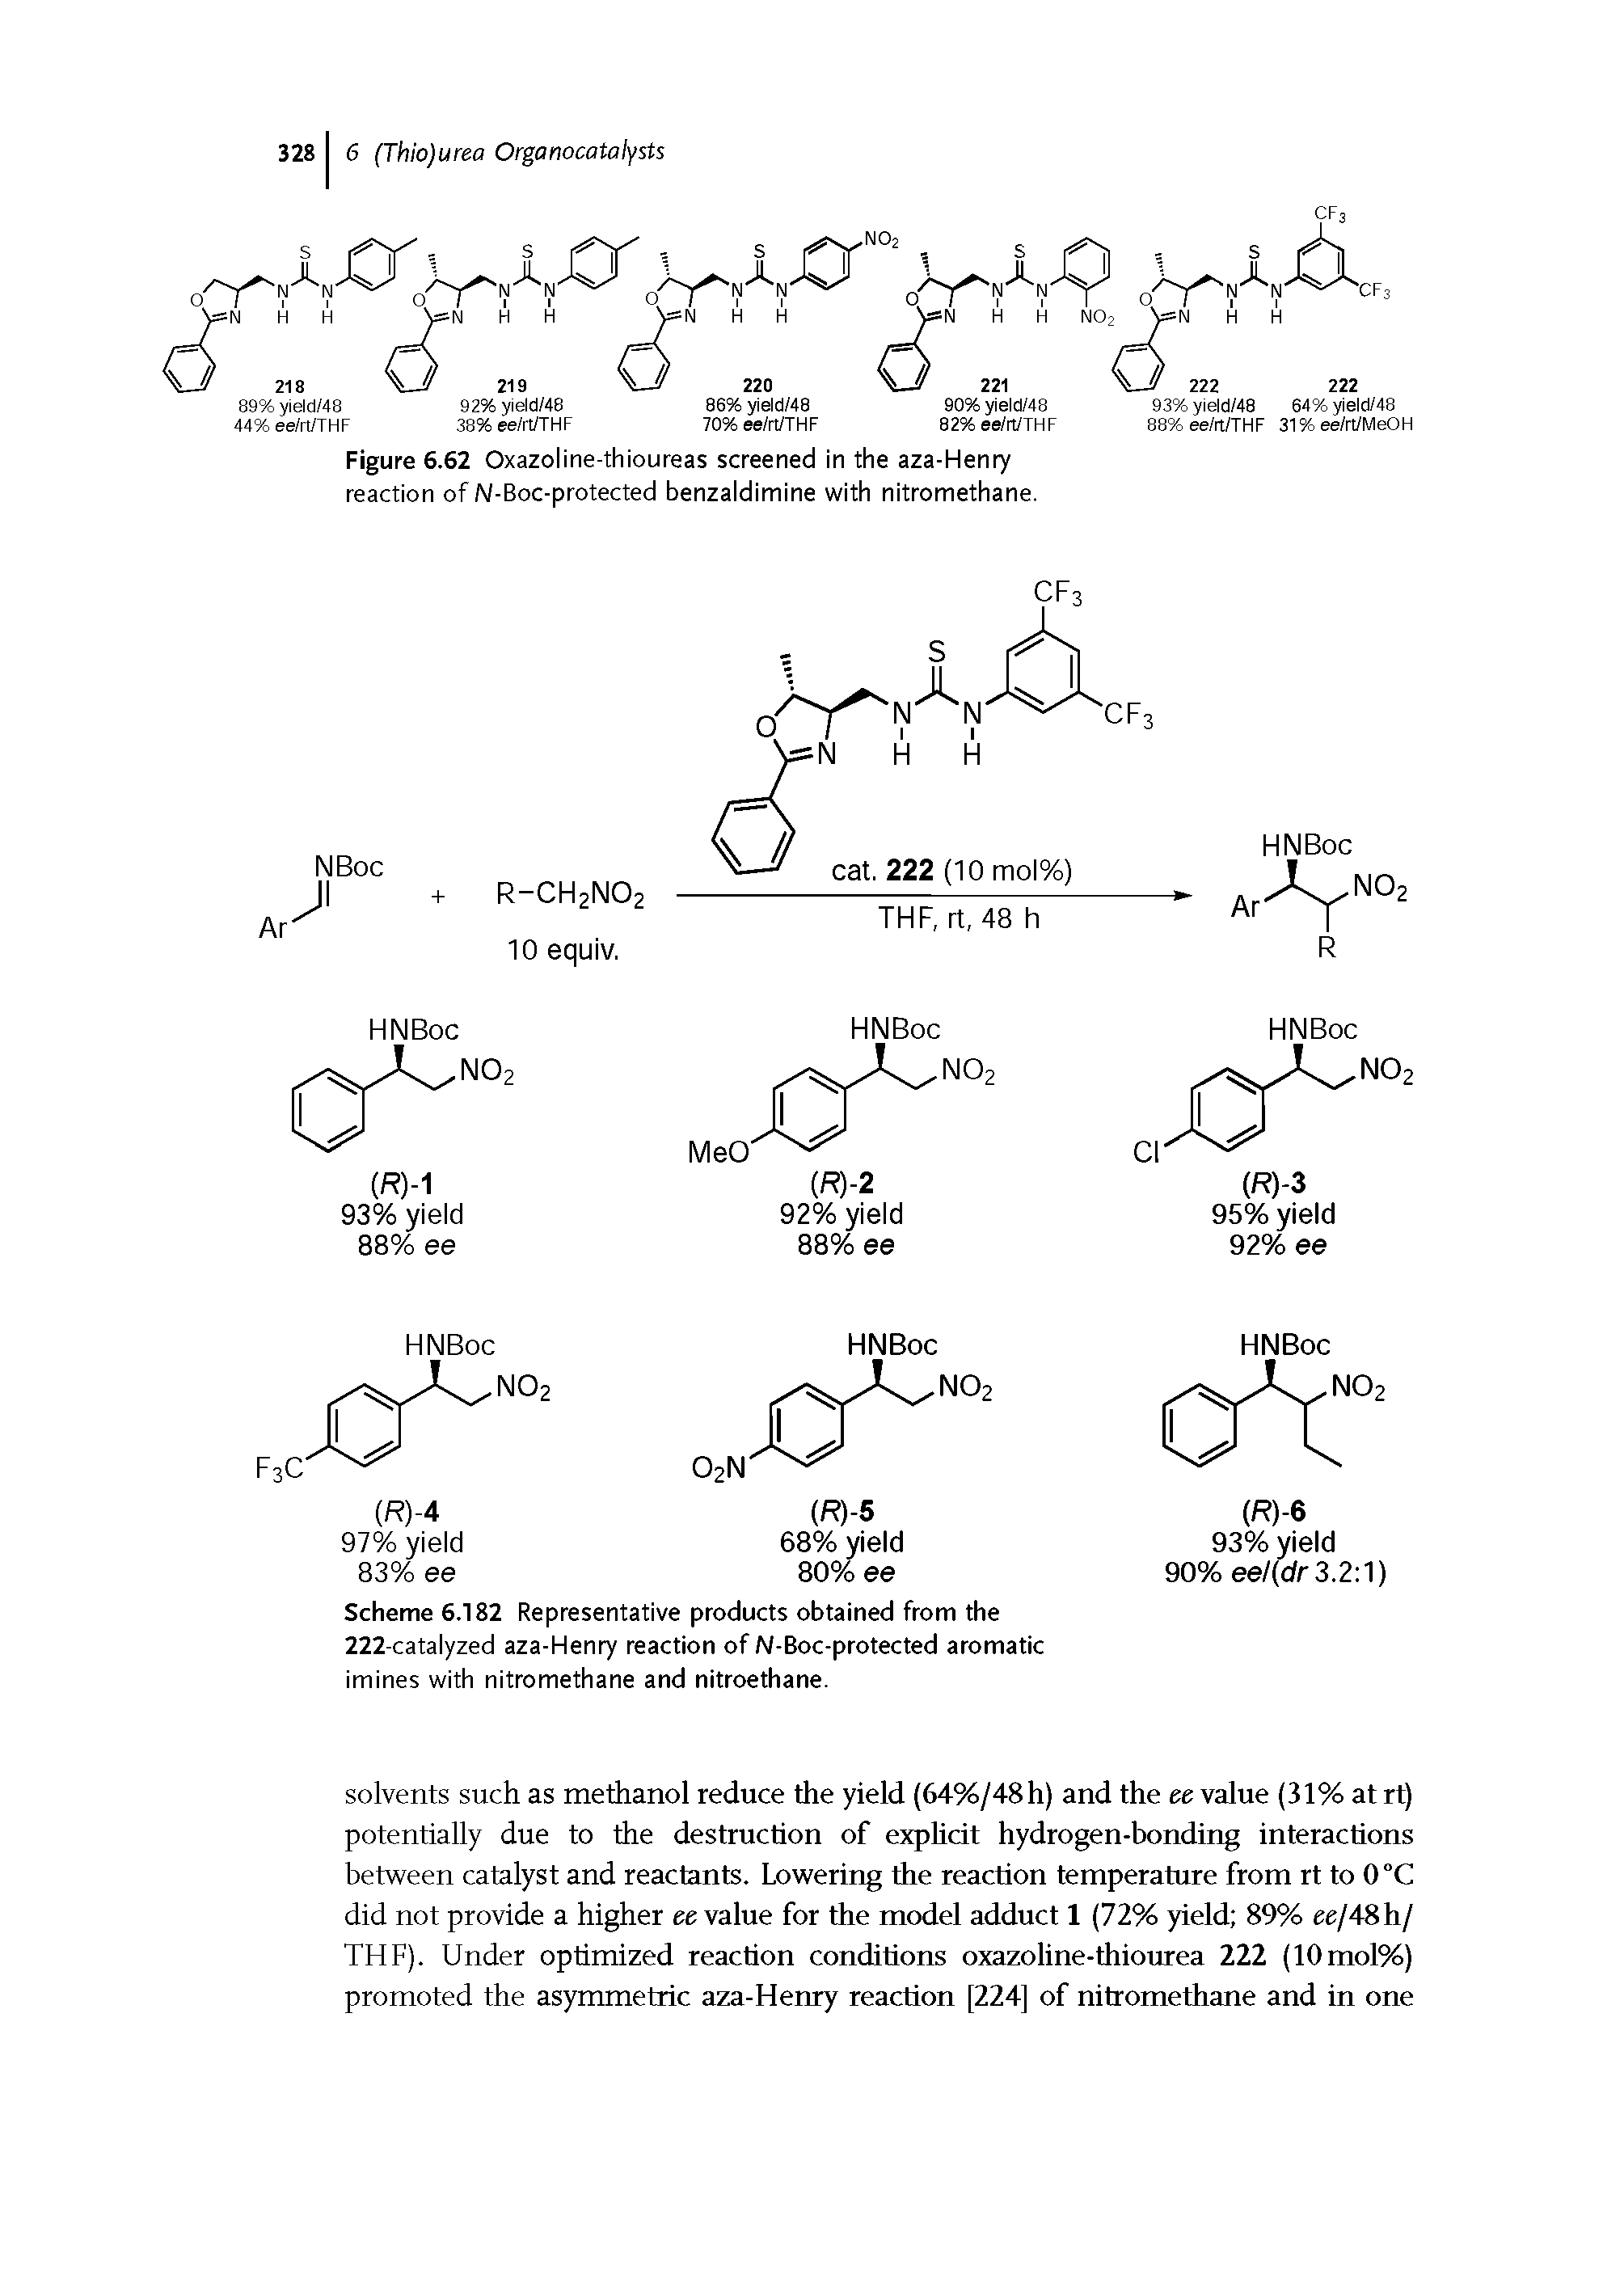 Figure 6.62 Oxazoline-thioureas screened in the aza-Henry reaction of N-Boc-protected benzaldimine with nitromethane.